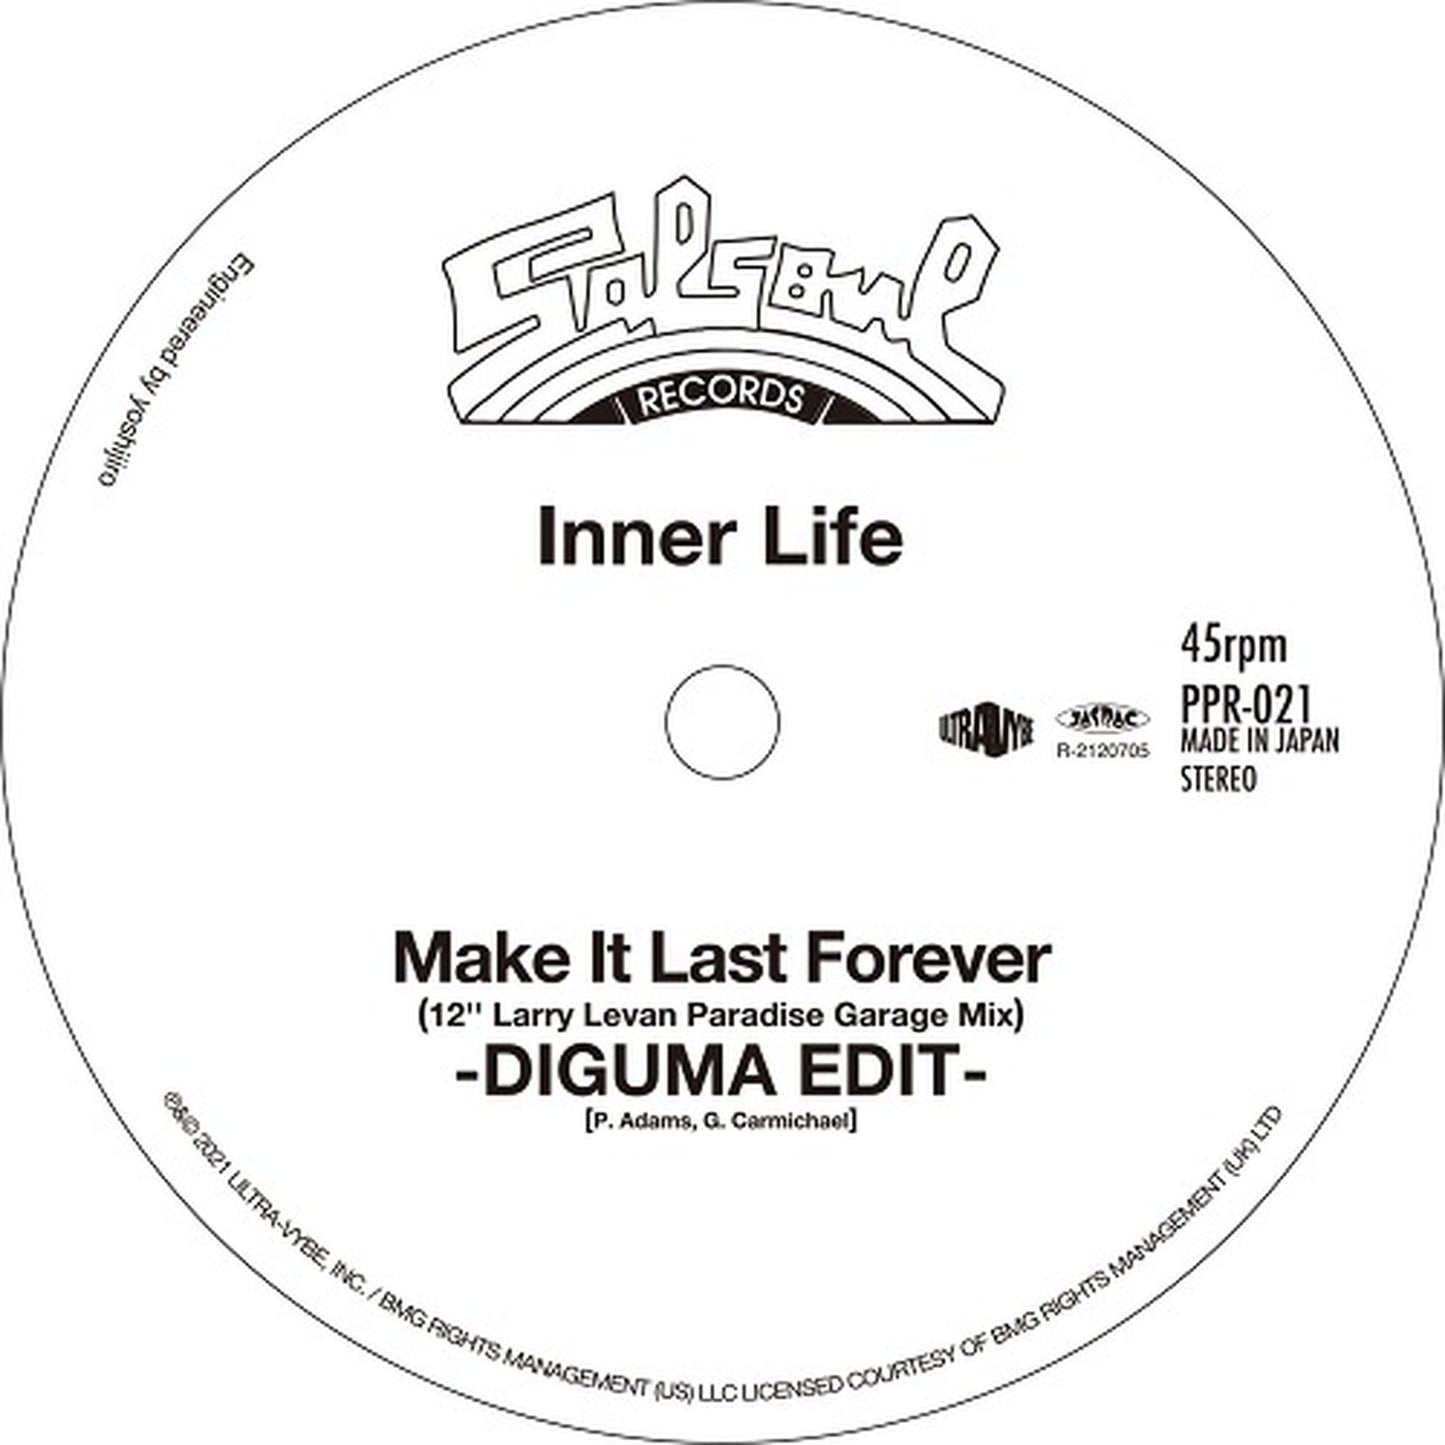 【7"】Inner Life / Candido - Make It Last Forever (12" Larry Levan Paradise Garage Mix) -DIGUMA EDIT- / Jingo (Moplen Remix) -DIGUMA EDIT-